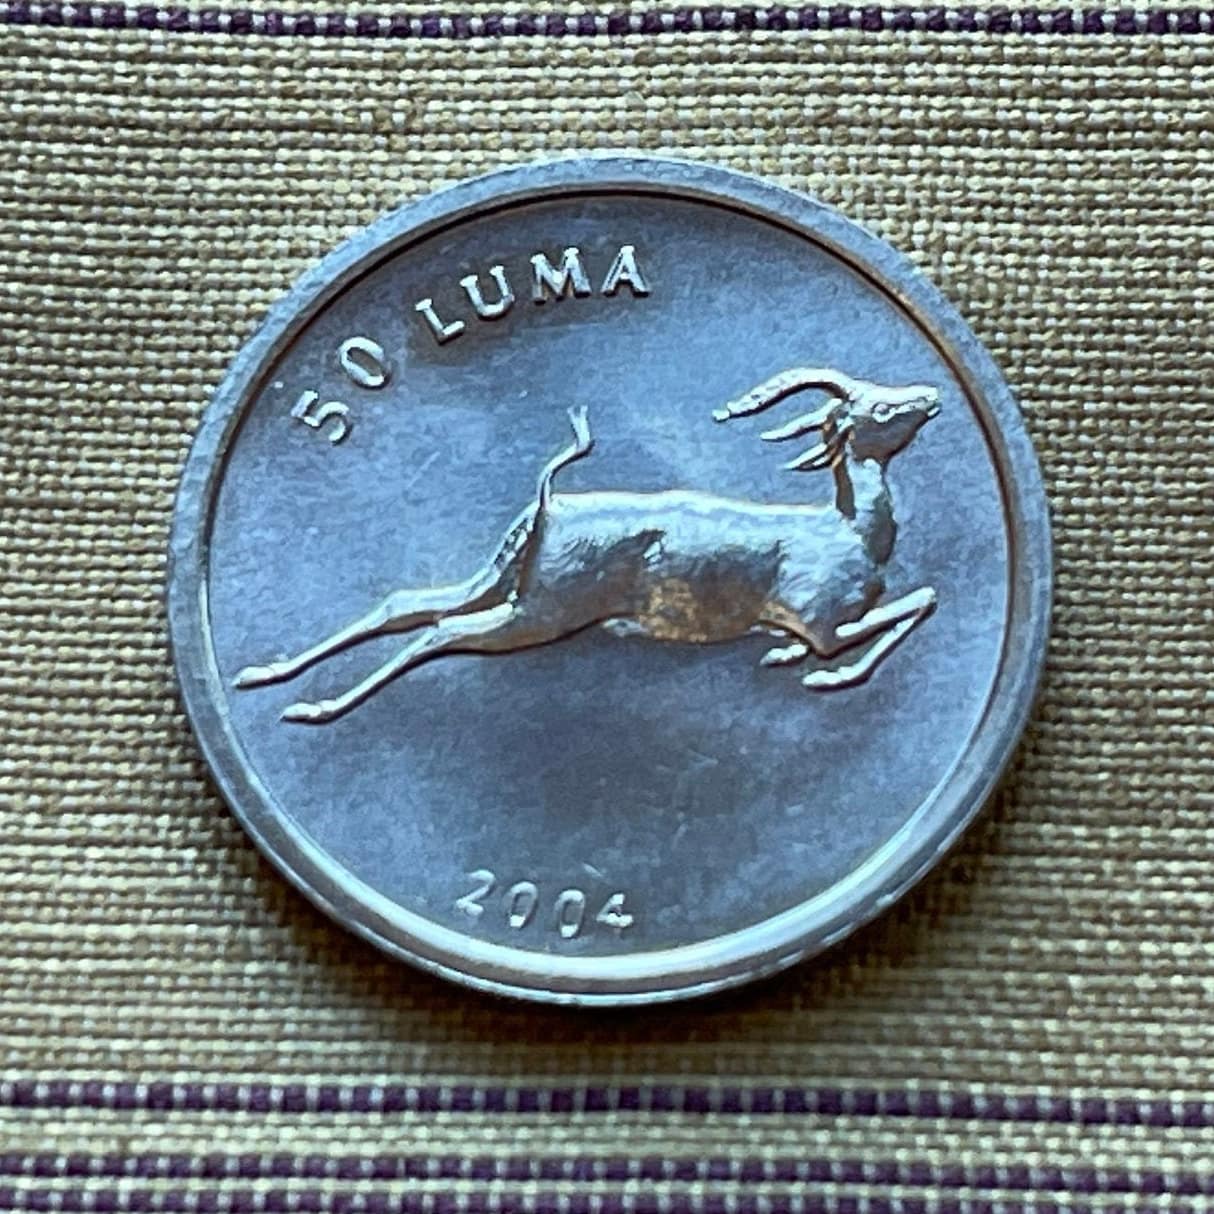 Goitered Gazelle 50 Luma Nagorno-Karabakh Authentic Coin Money for Jewelry and Craft Making (Hunting) (Ritual Sacrifice)